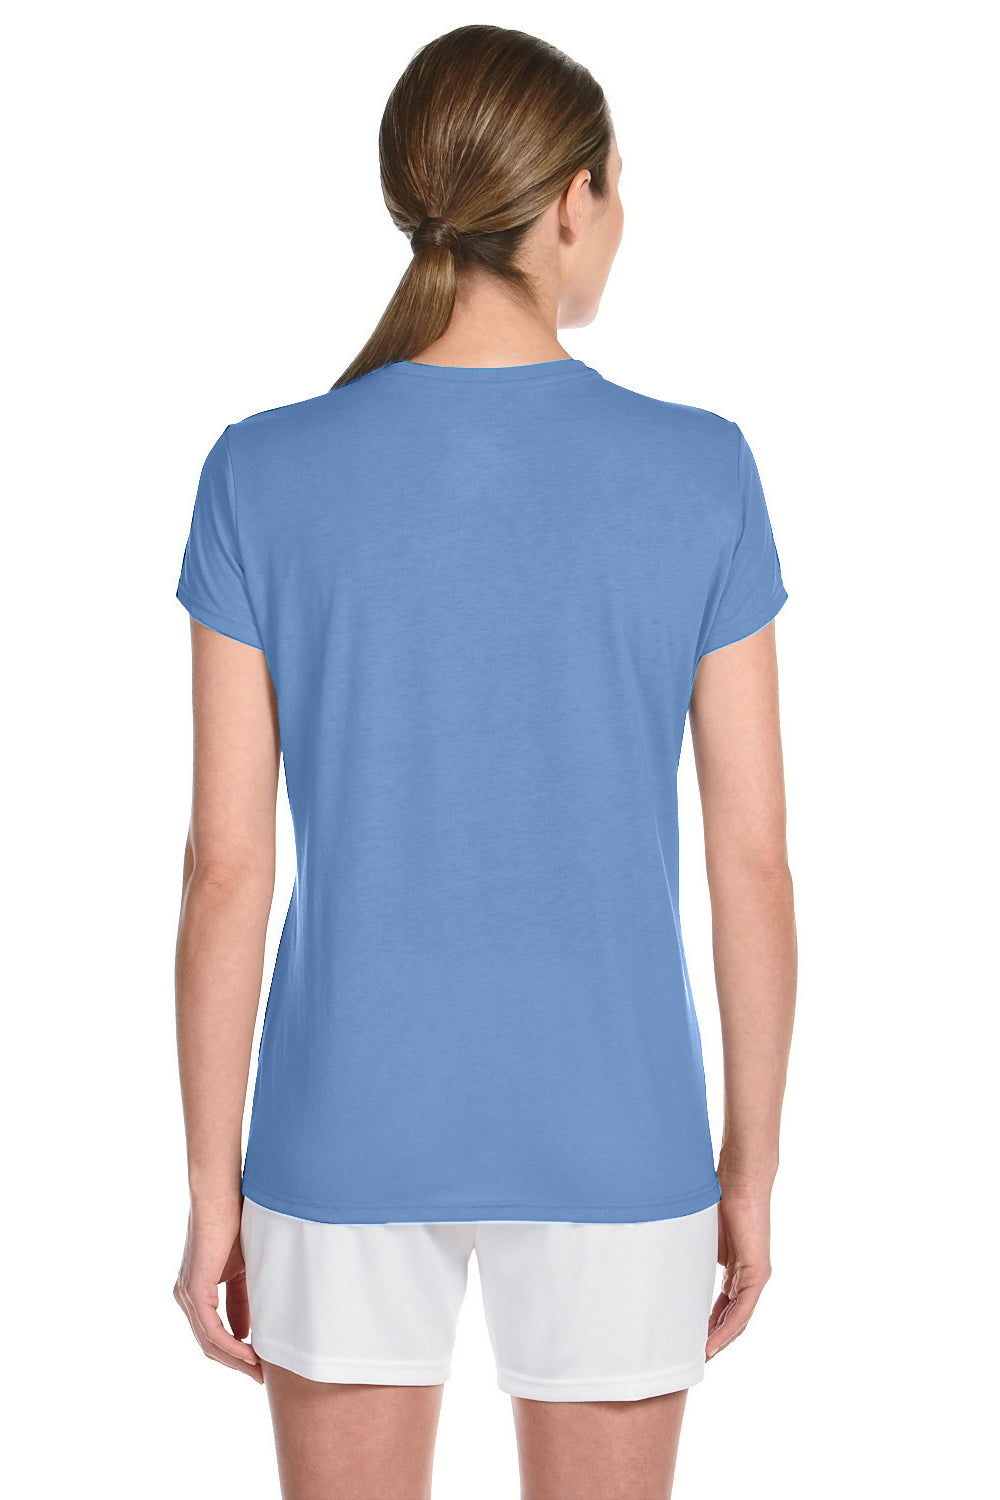 Gildan G420L Womens Performance Jersey Moisture Wicking Short Sleeve Crewneck T-Shirt Carolina Blue Back